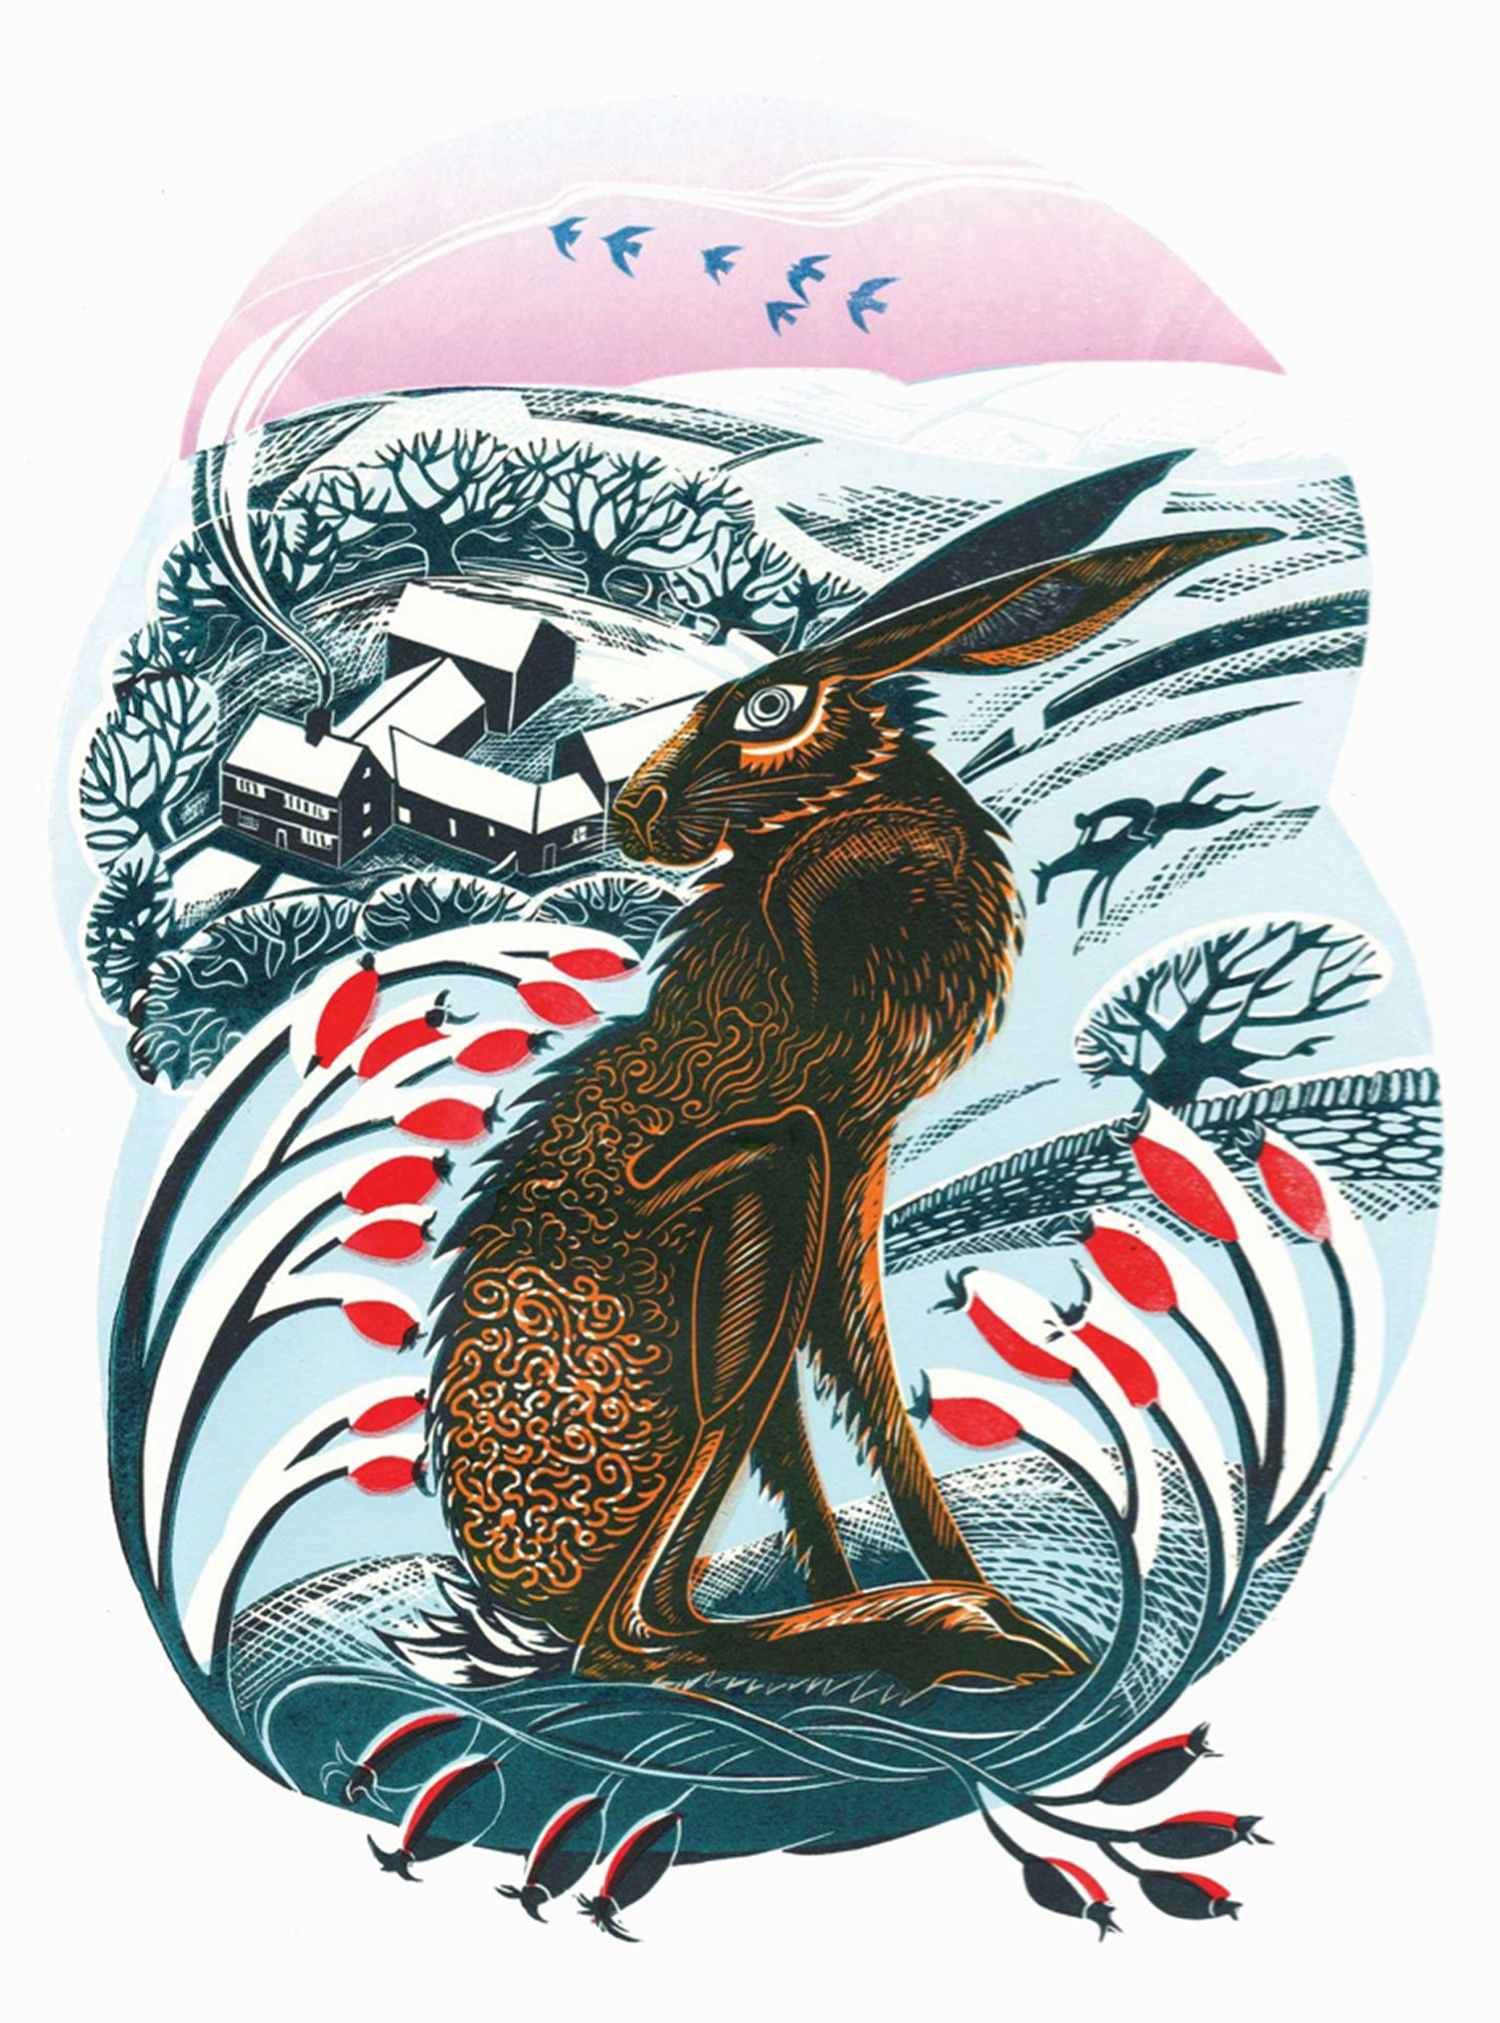 Peak District Hare by Jeremy James